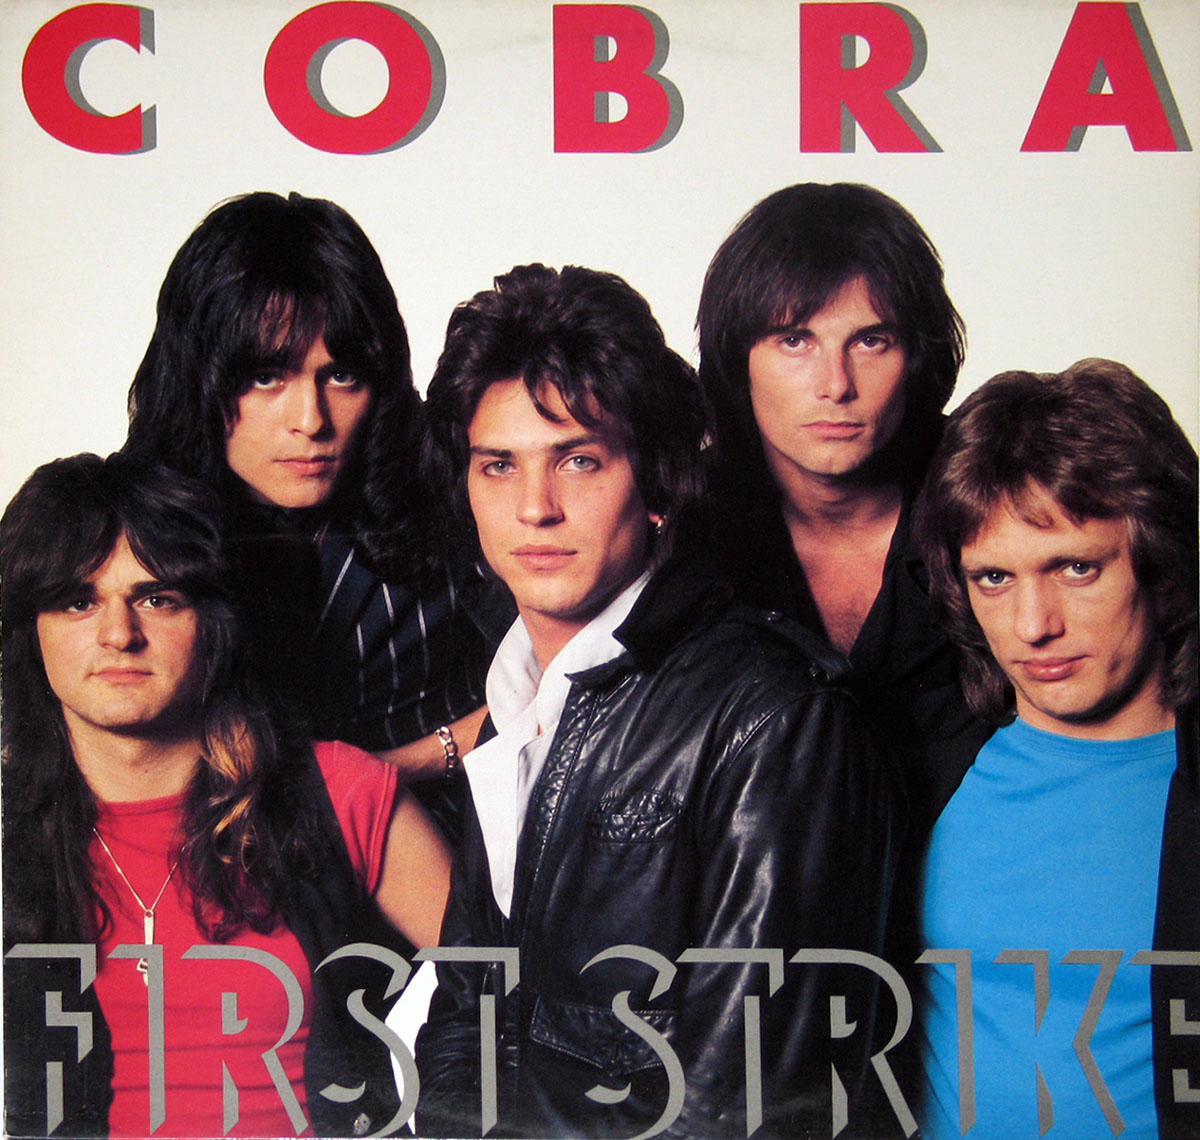 High Resolution Photo cobra first strike Vinyl Record